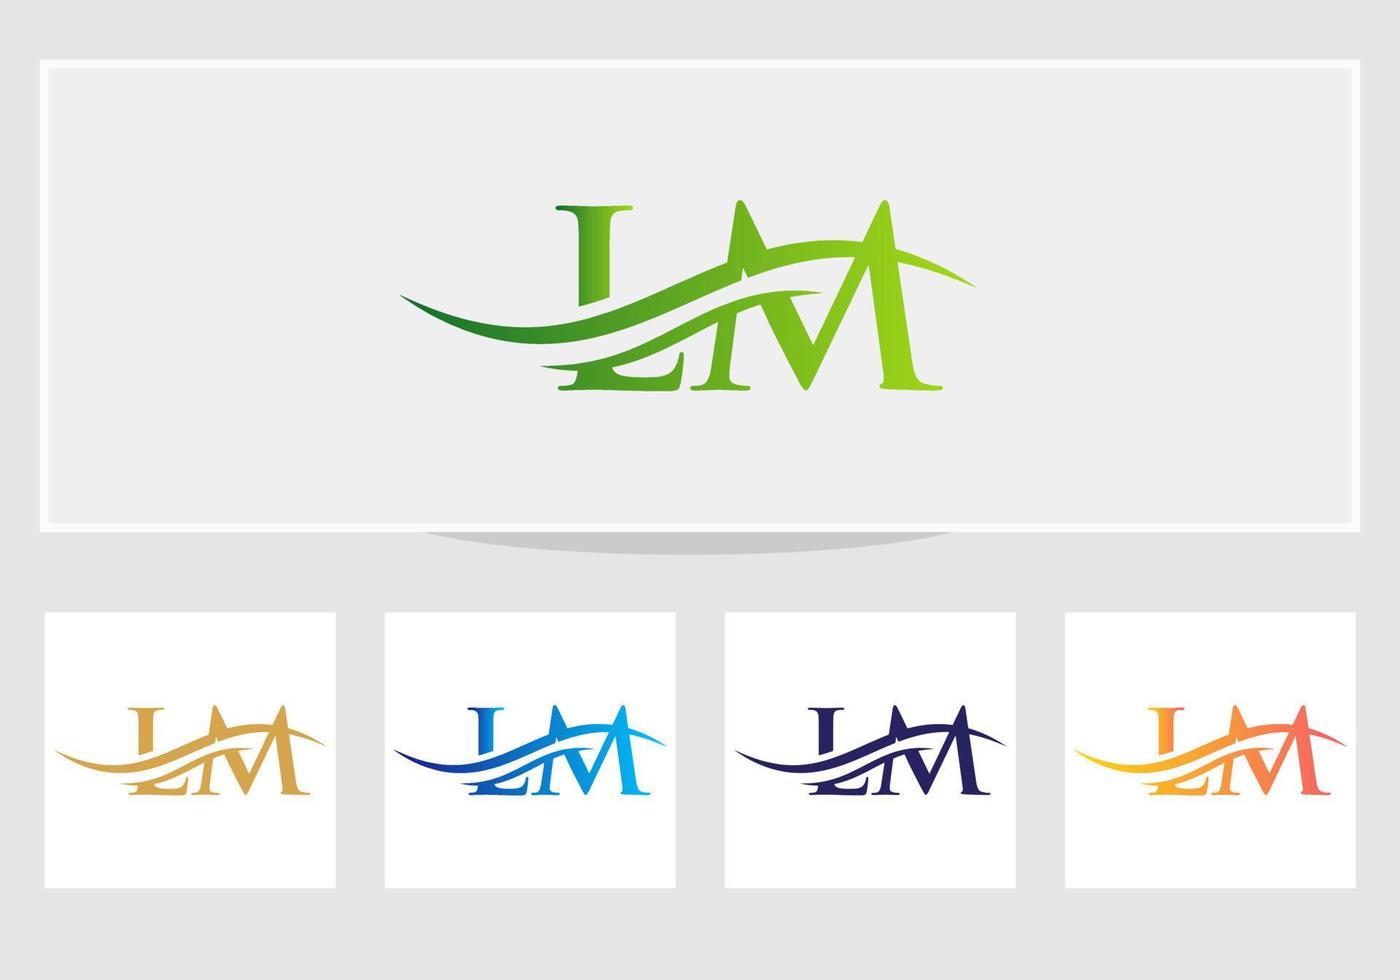 lm logo design vettore. swoosh lettera lm logo design. iniziale lm lettera connesso logo vettore modello